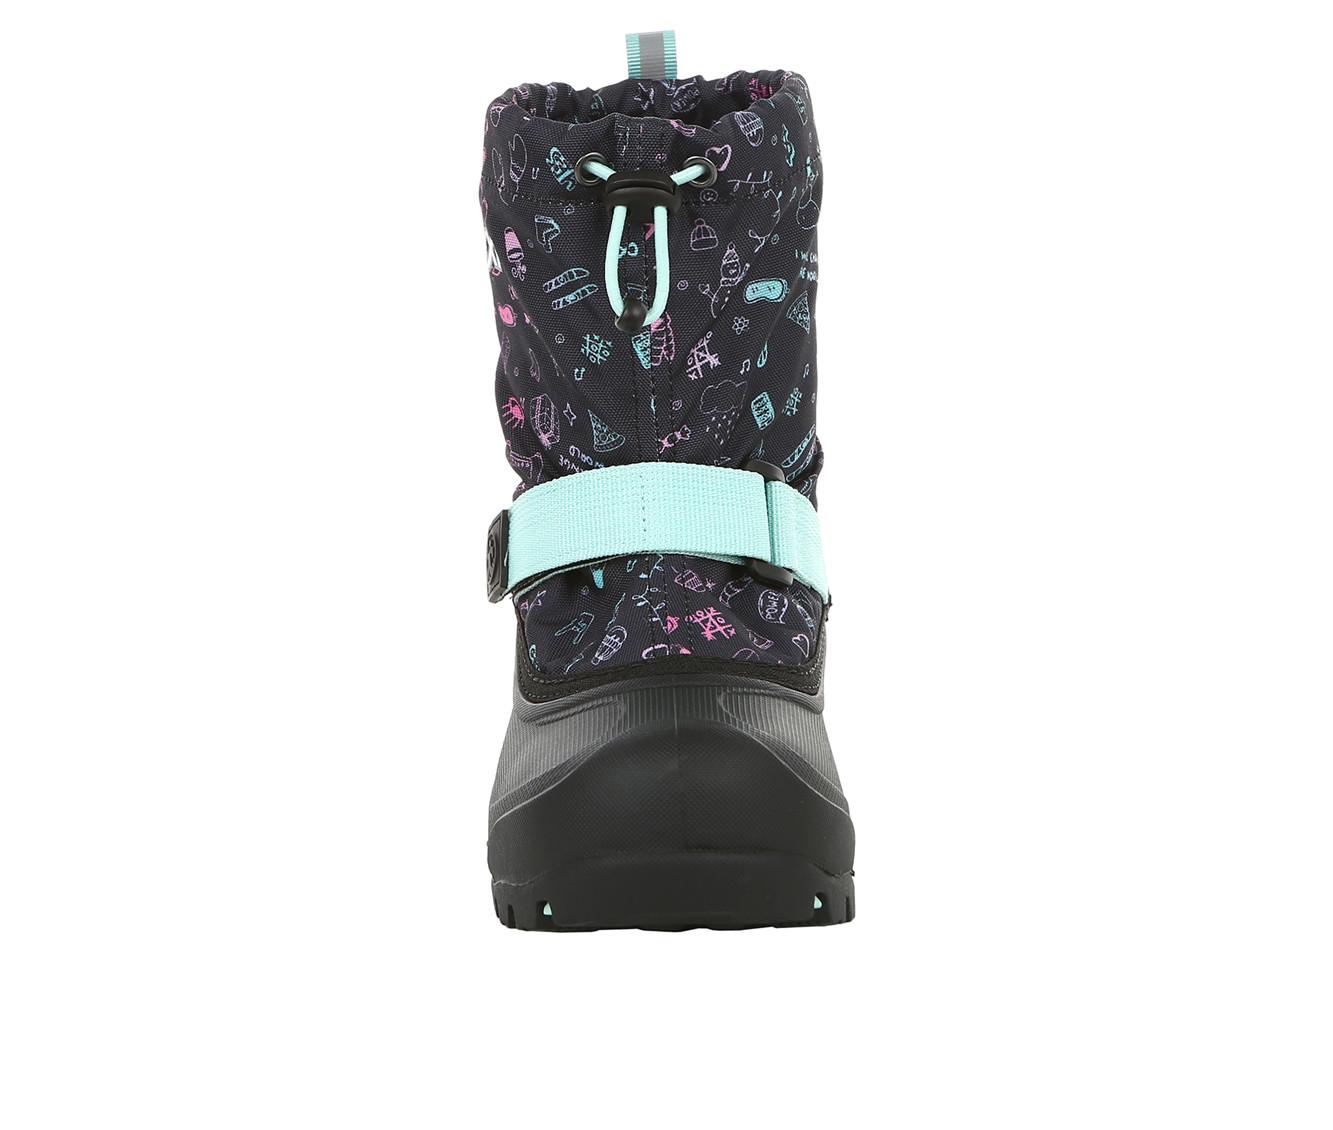 Girls' Northside Toddler & Little Kid Frosty XT Waterproof Winter Boots